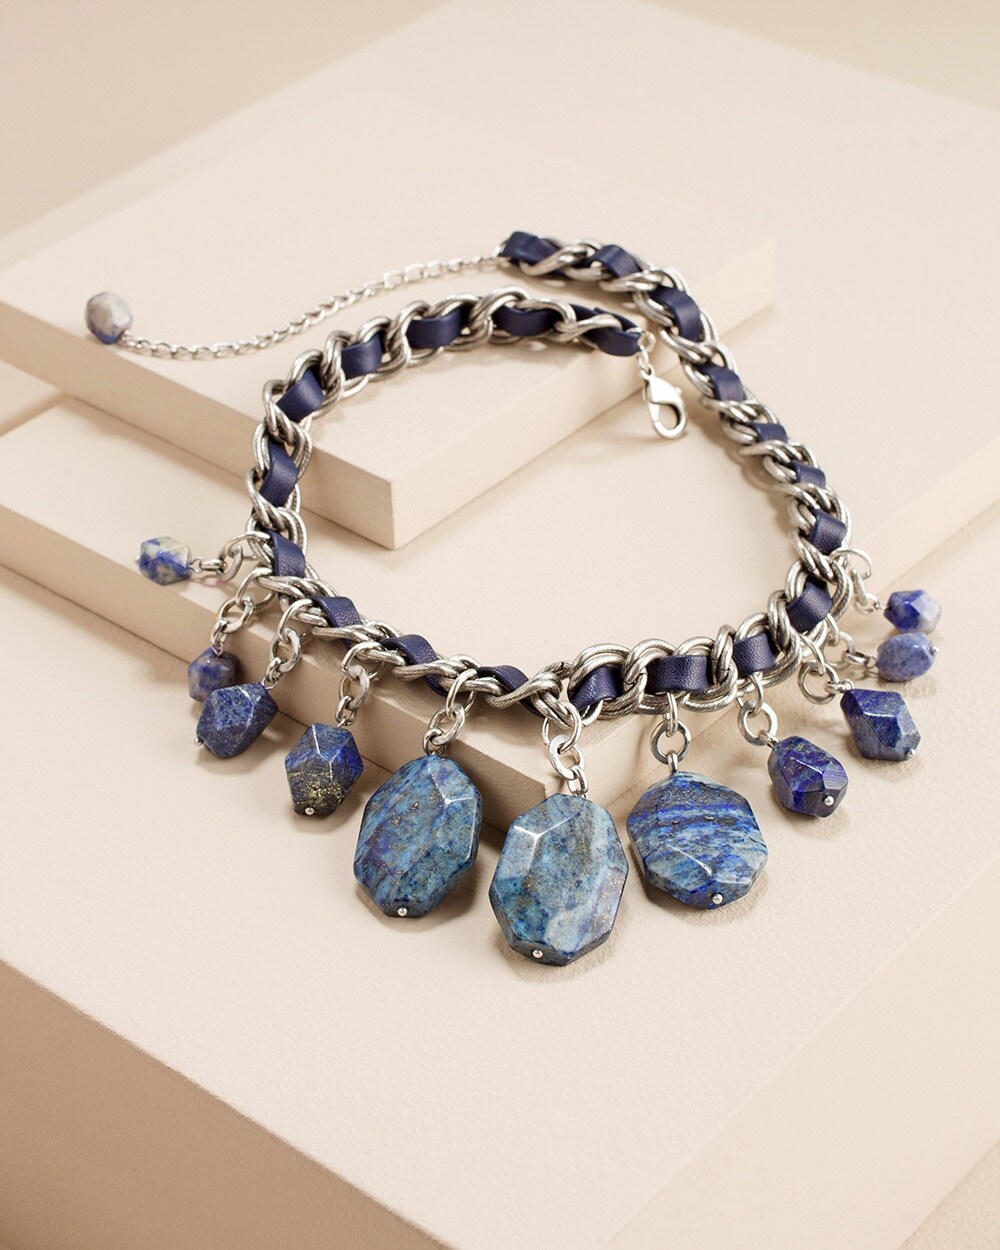 Blue Bib Necklace